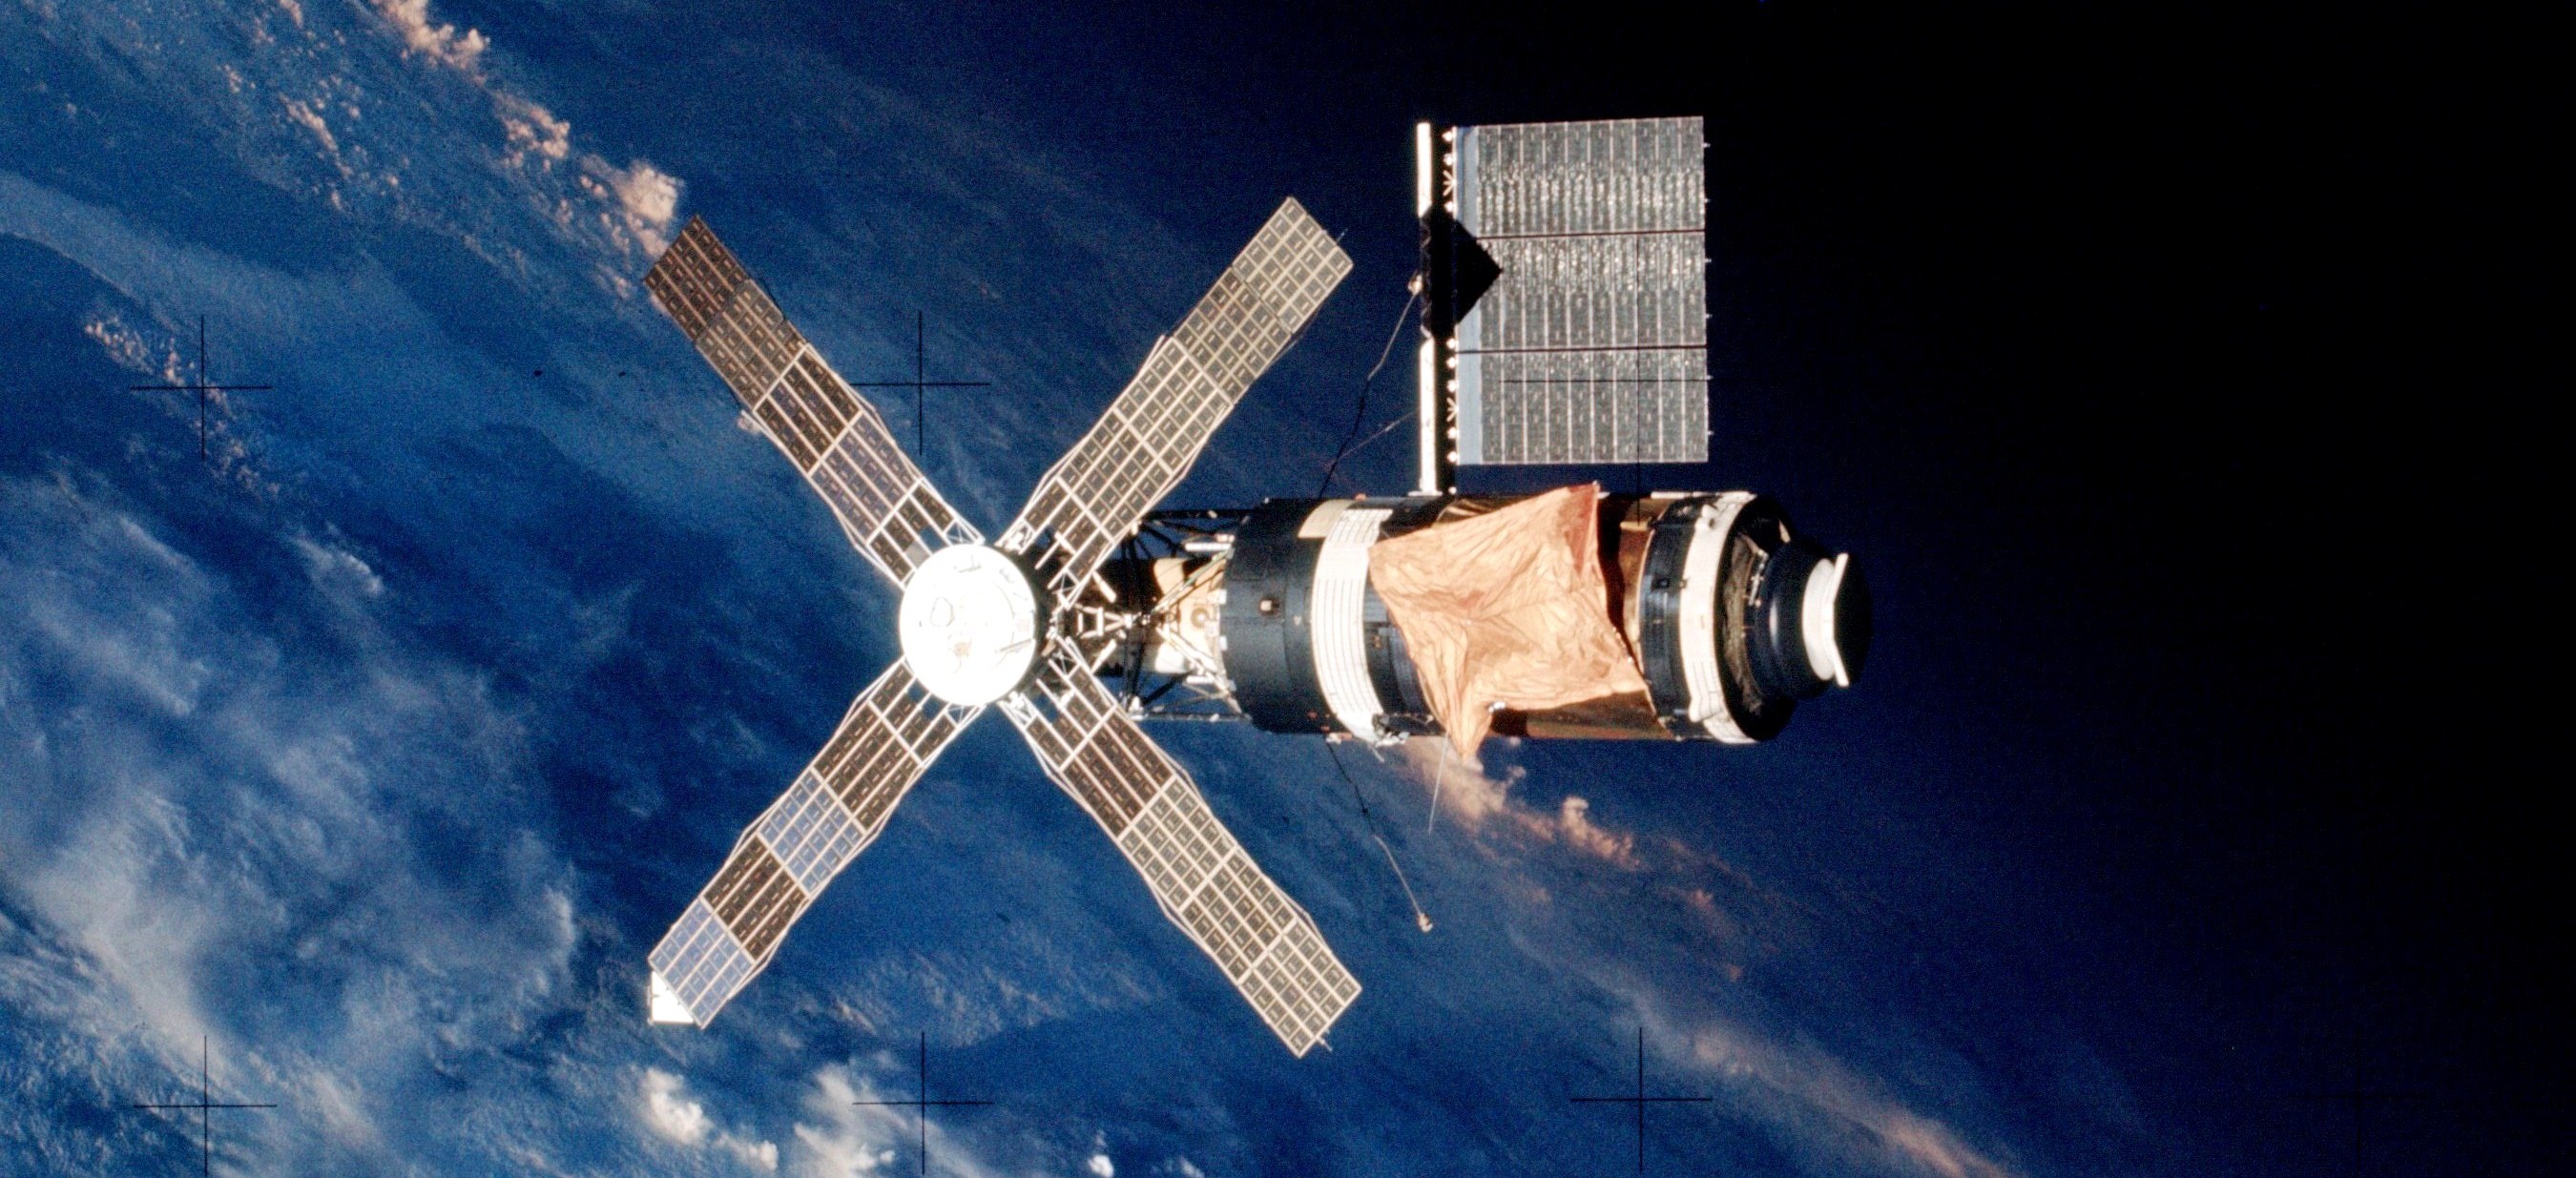 Skylab spacestation